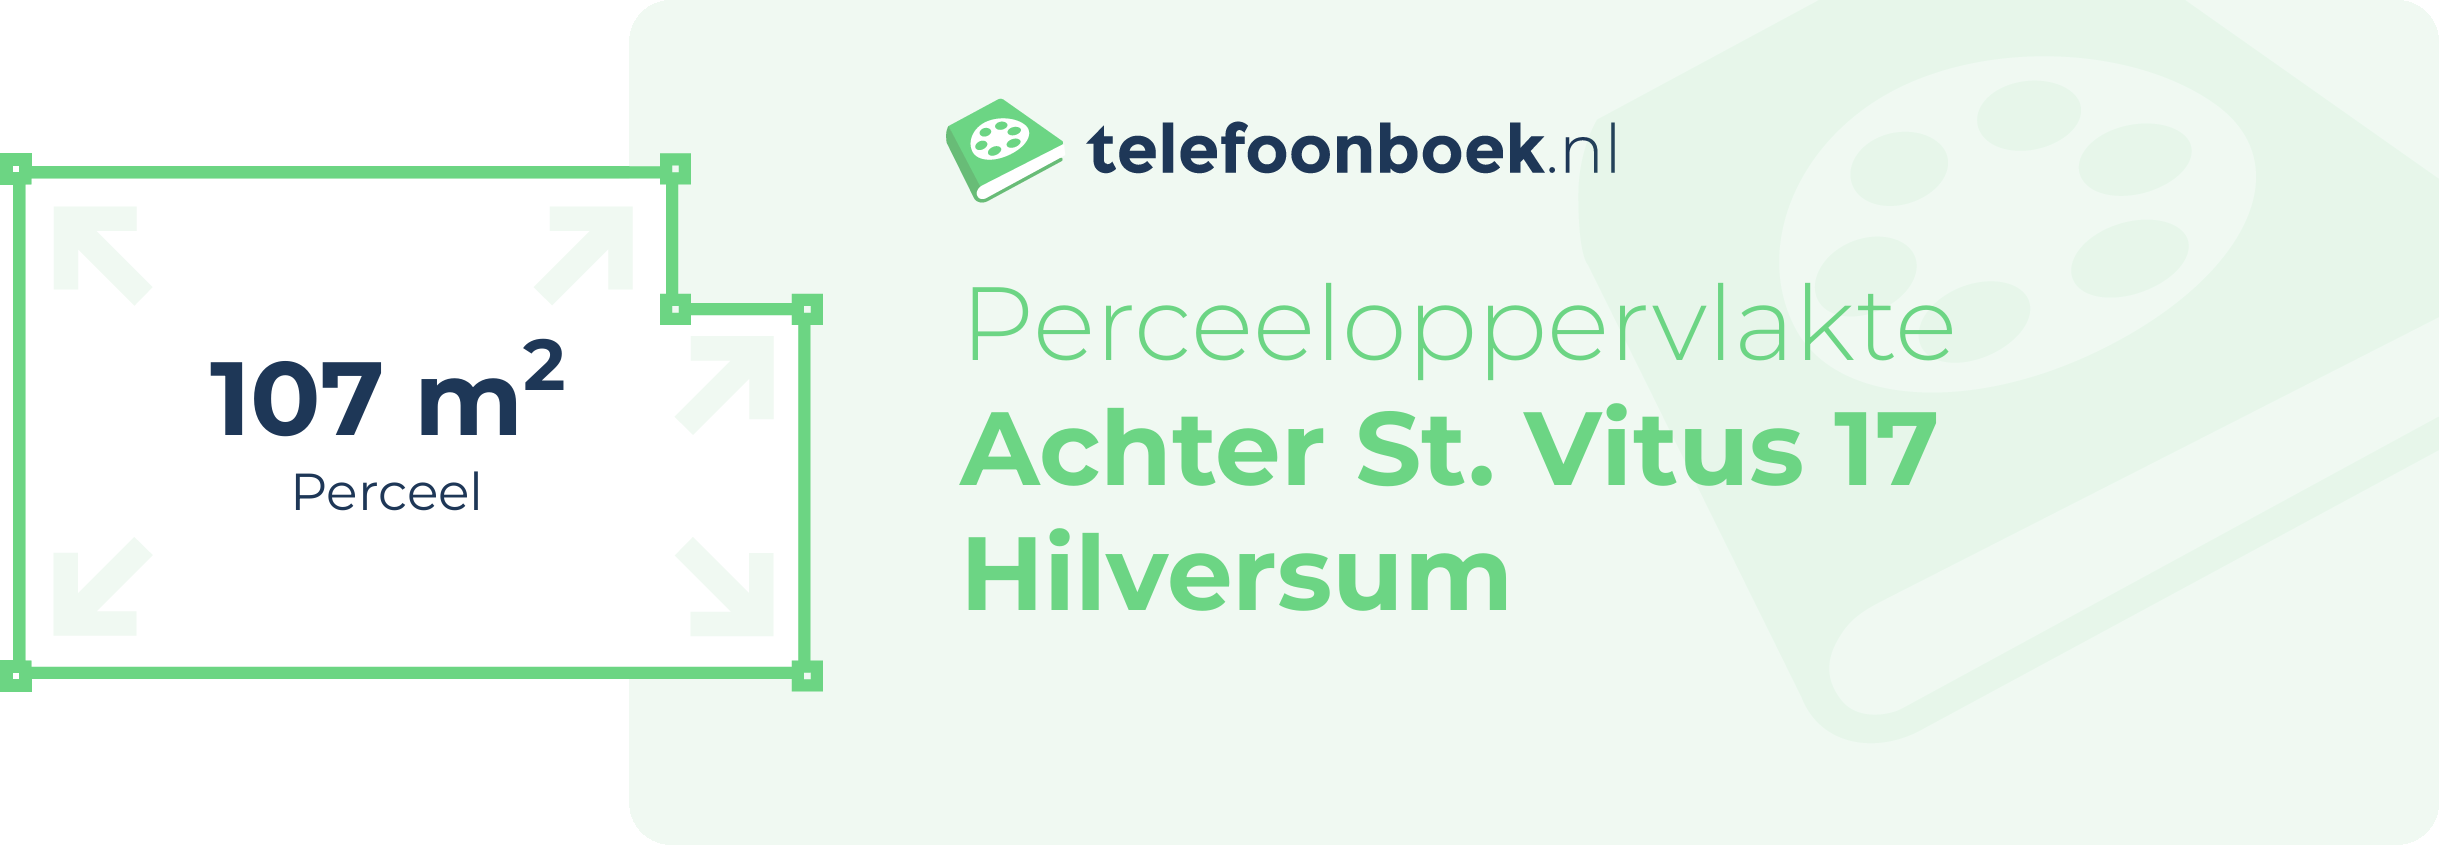 Perceeloppervlakte Achter St. Vitus 17 Hilversum